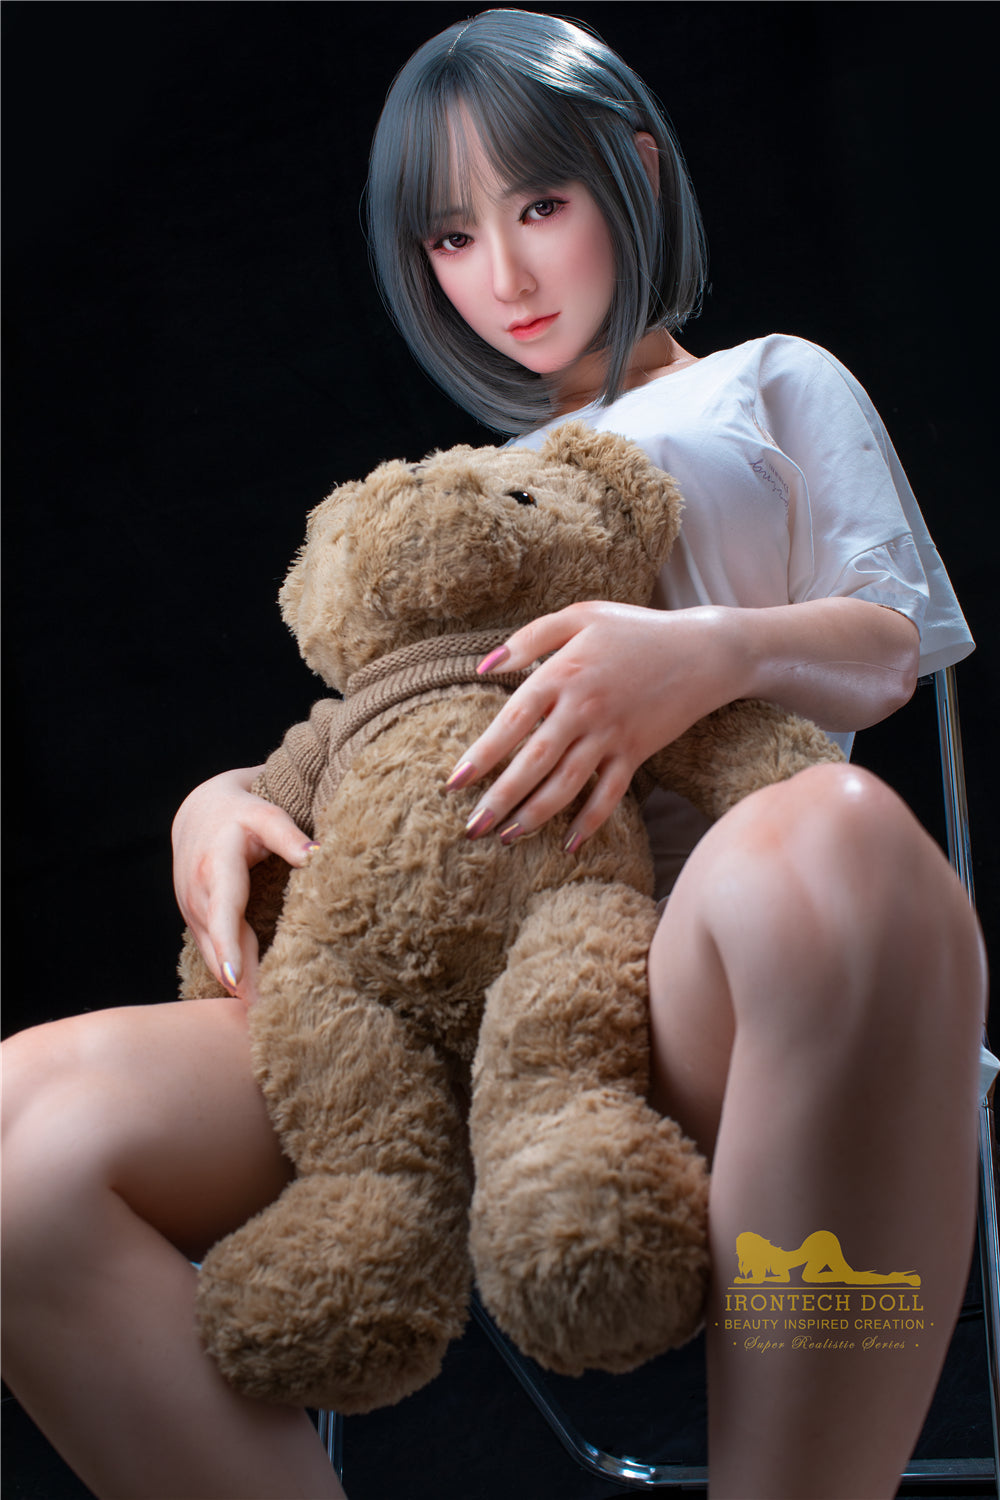 Irontech - Silicone Realistic Love Doll - 5ft 5in (165cm) - Savannah - Love Dolls 4U